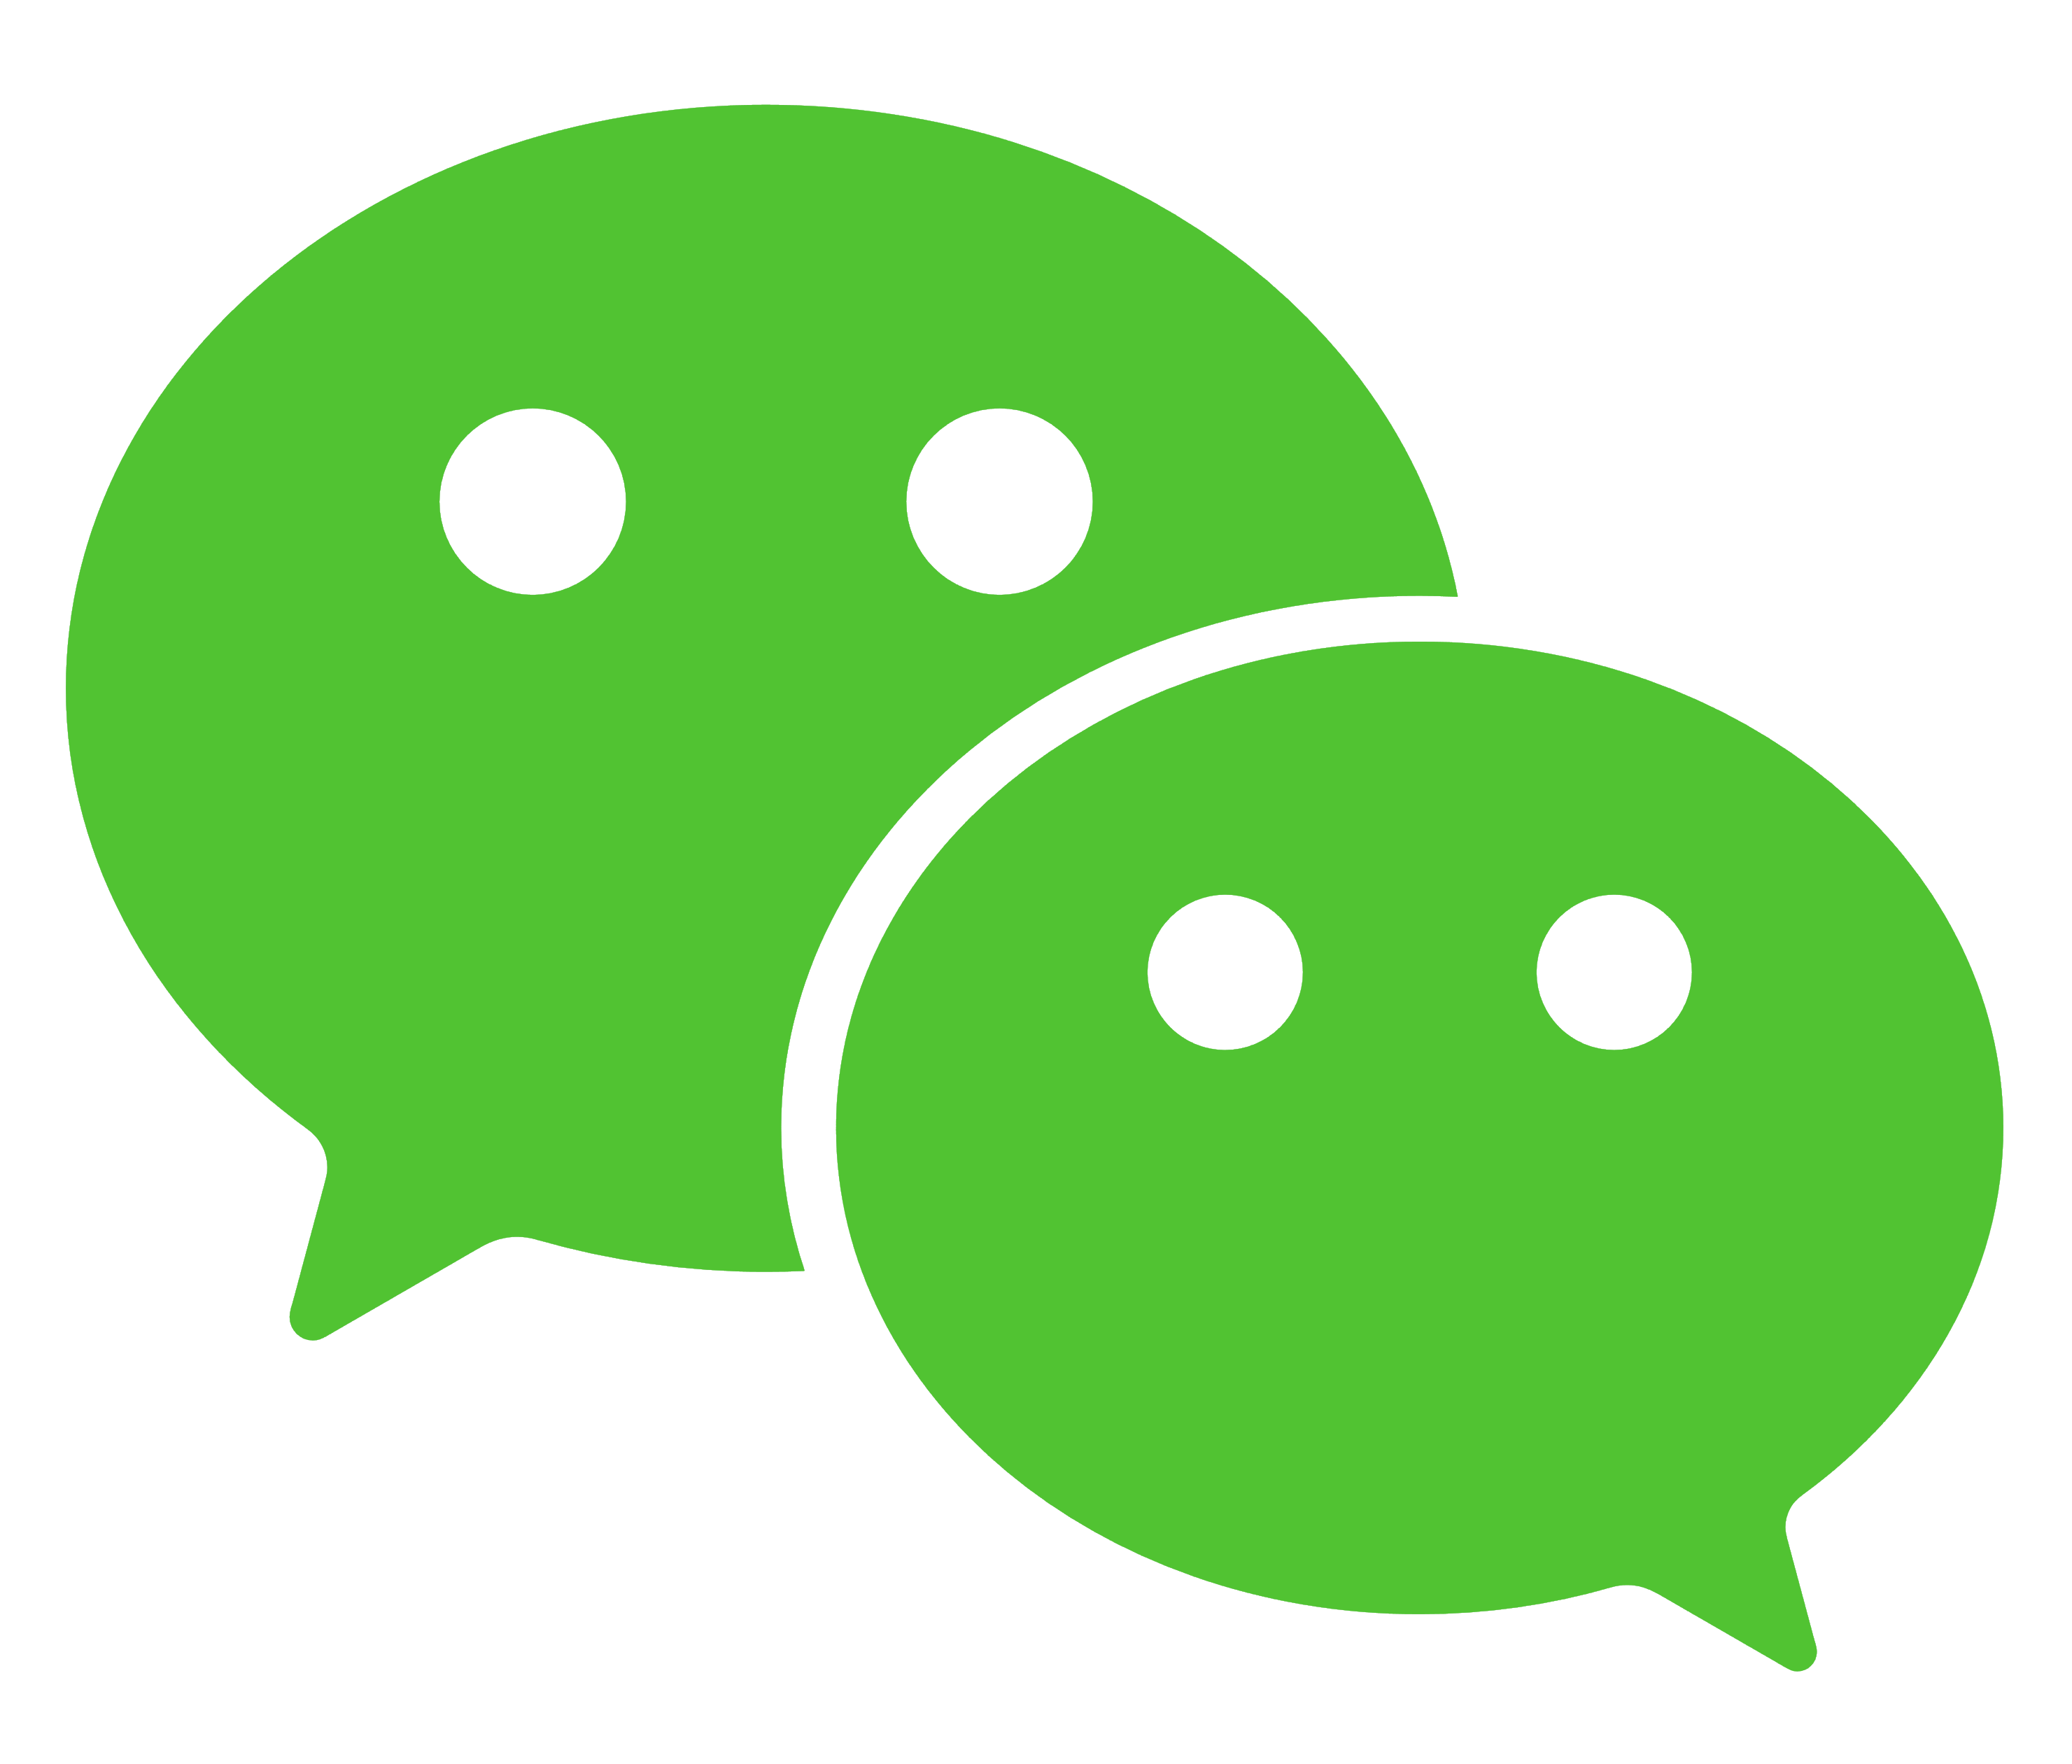 We Chat Logo - WeChat – Logos Download